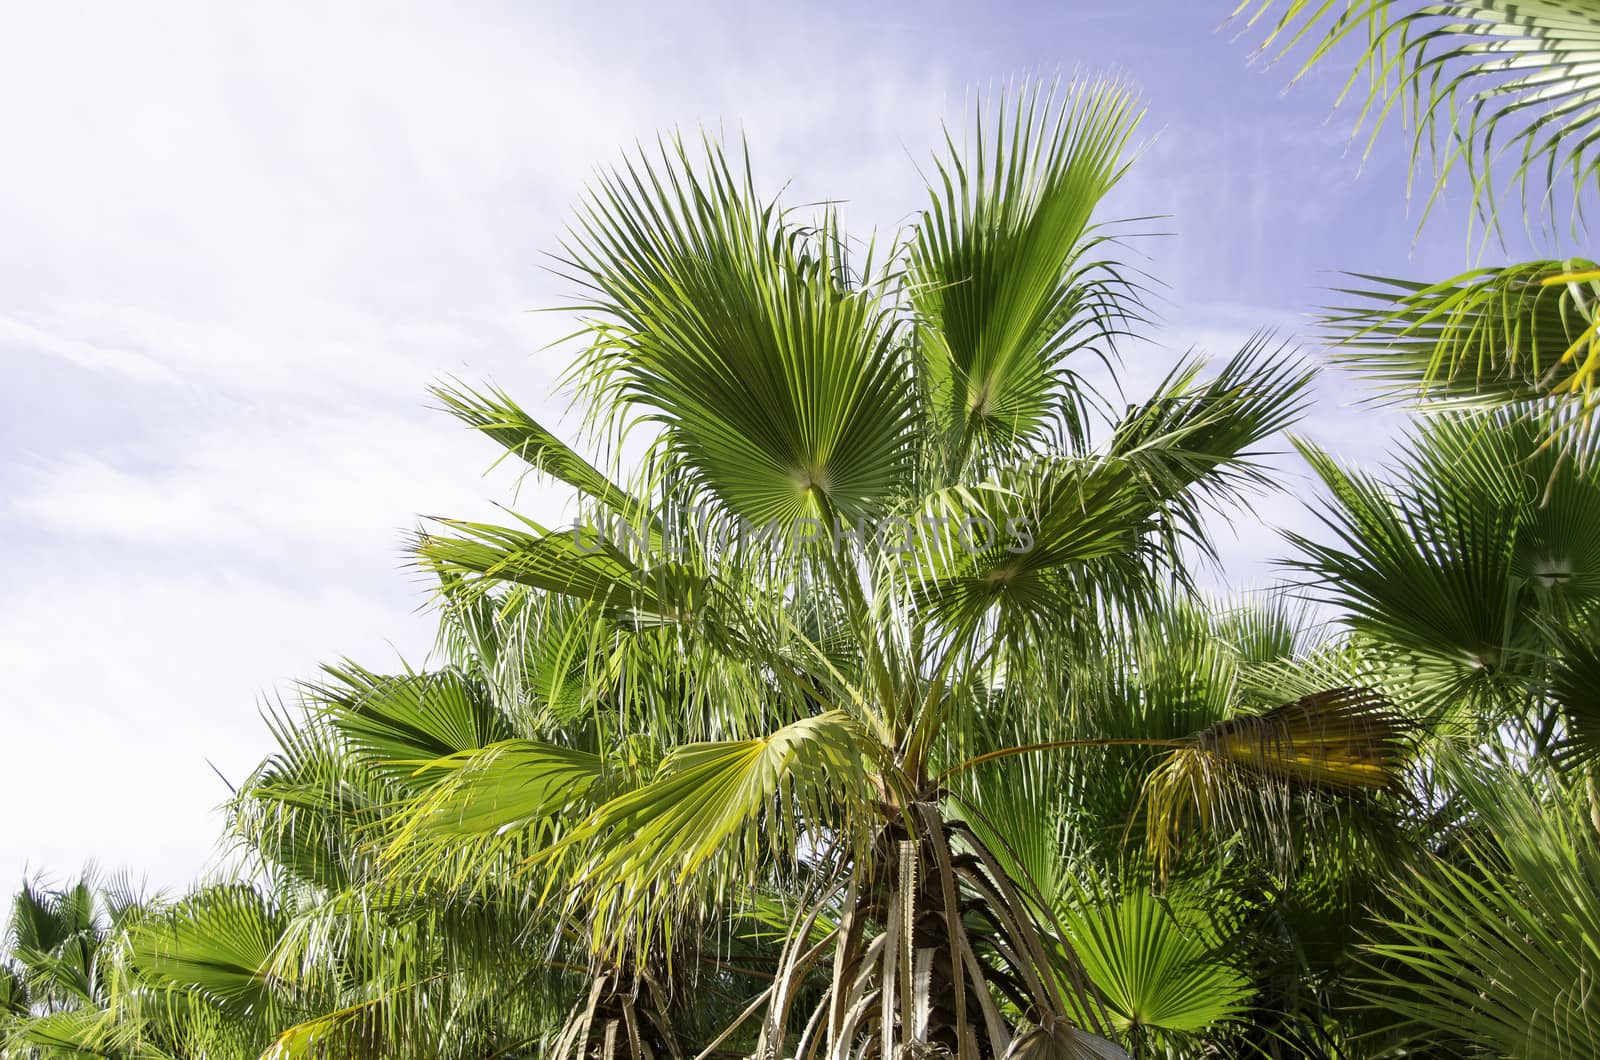 European fan palm, Chamaerops humilis as seen against the sky